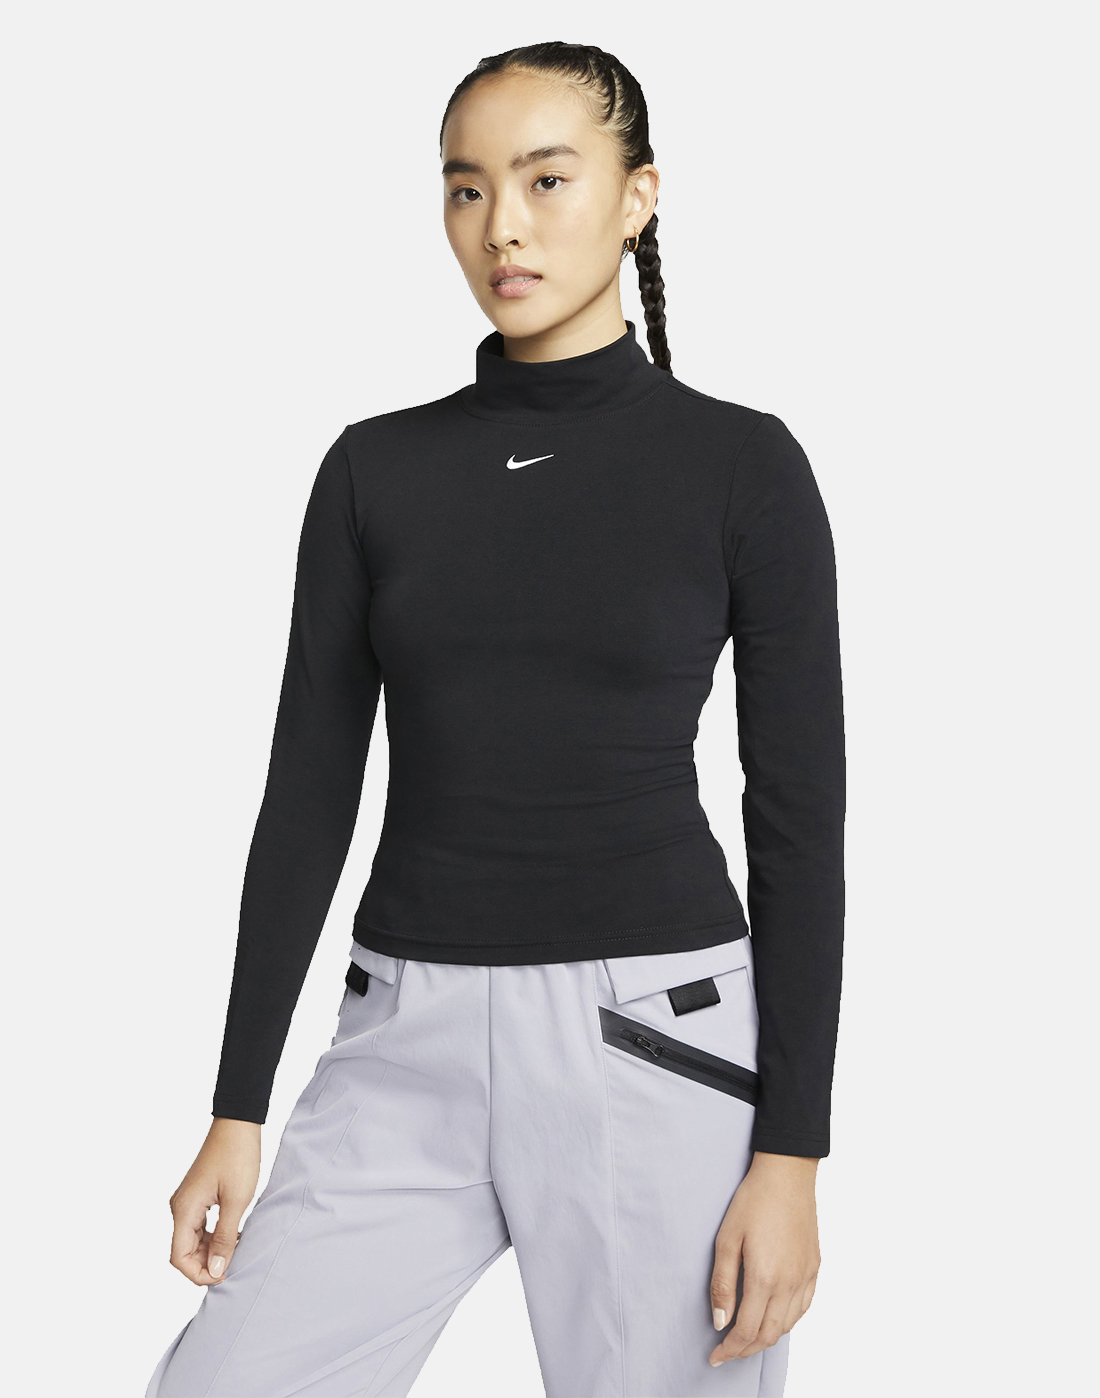 Nike Womens Essential Mock Long Sleeves Top - Black | Life Style Sports IE